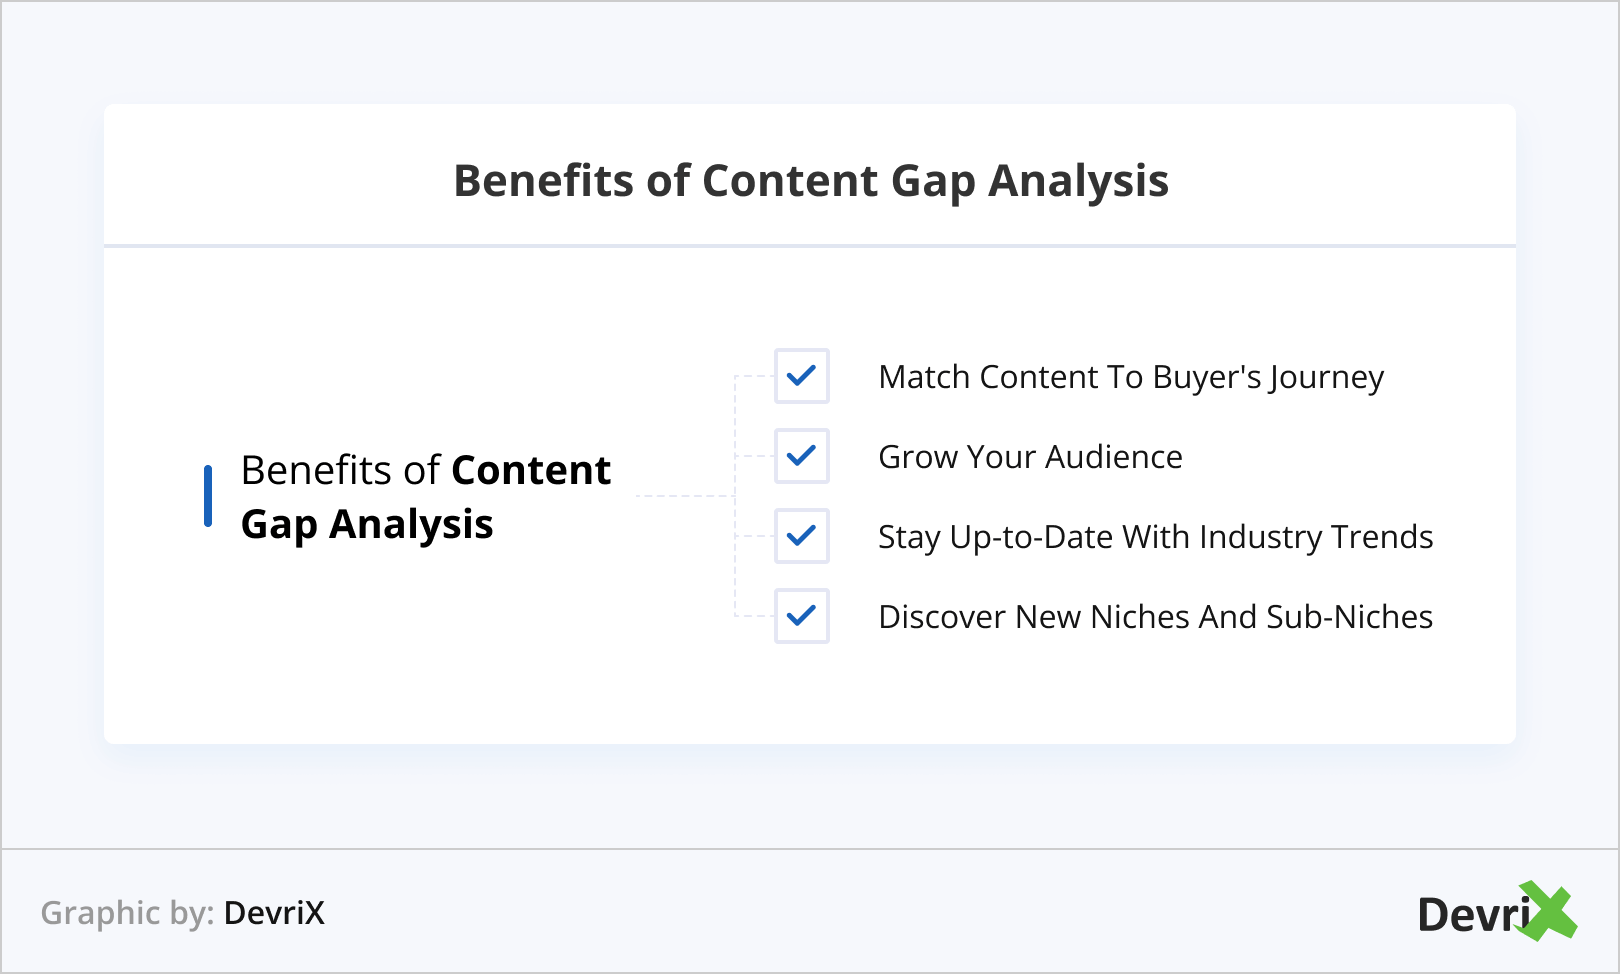 Benefits of Content Gap Analysis